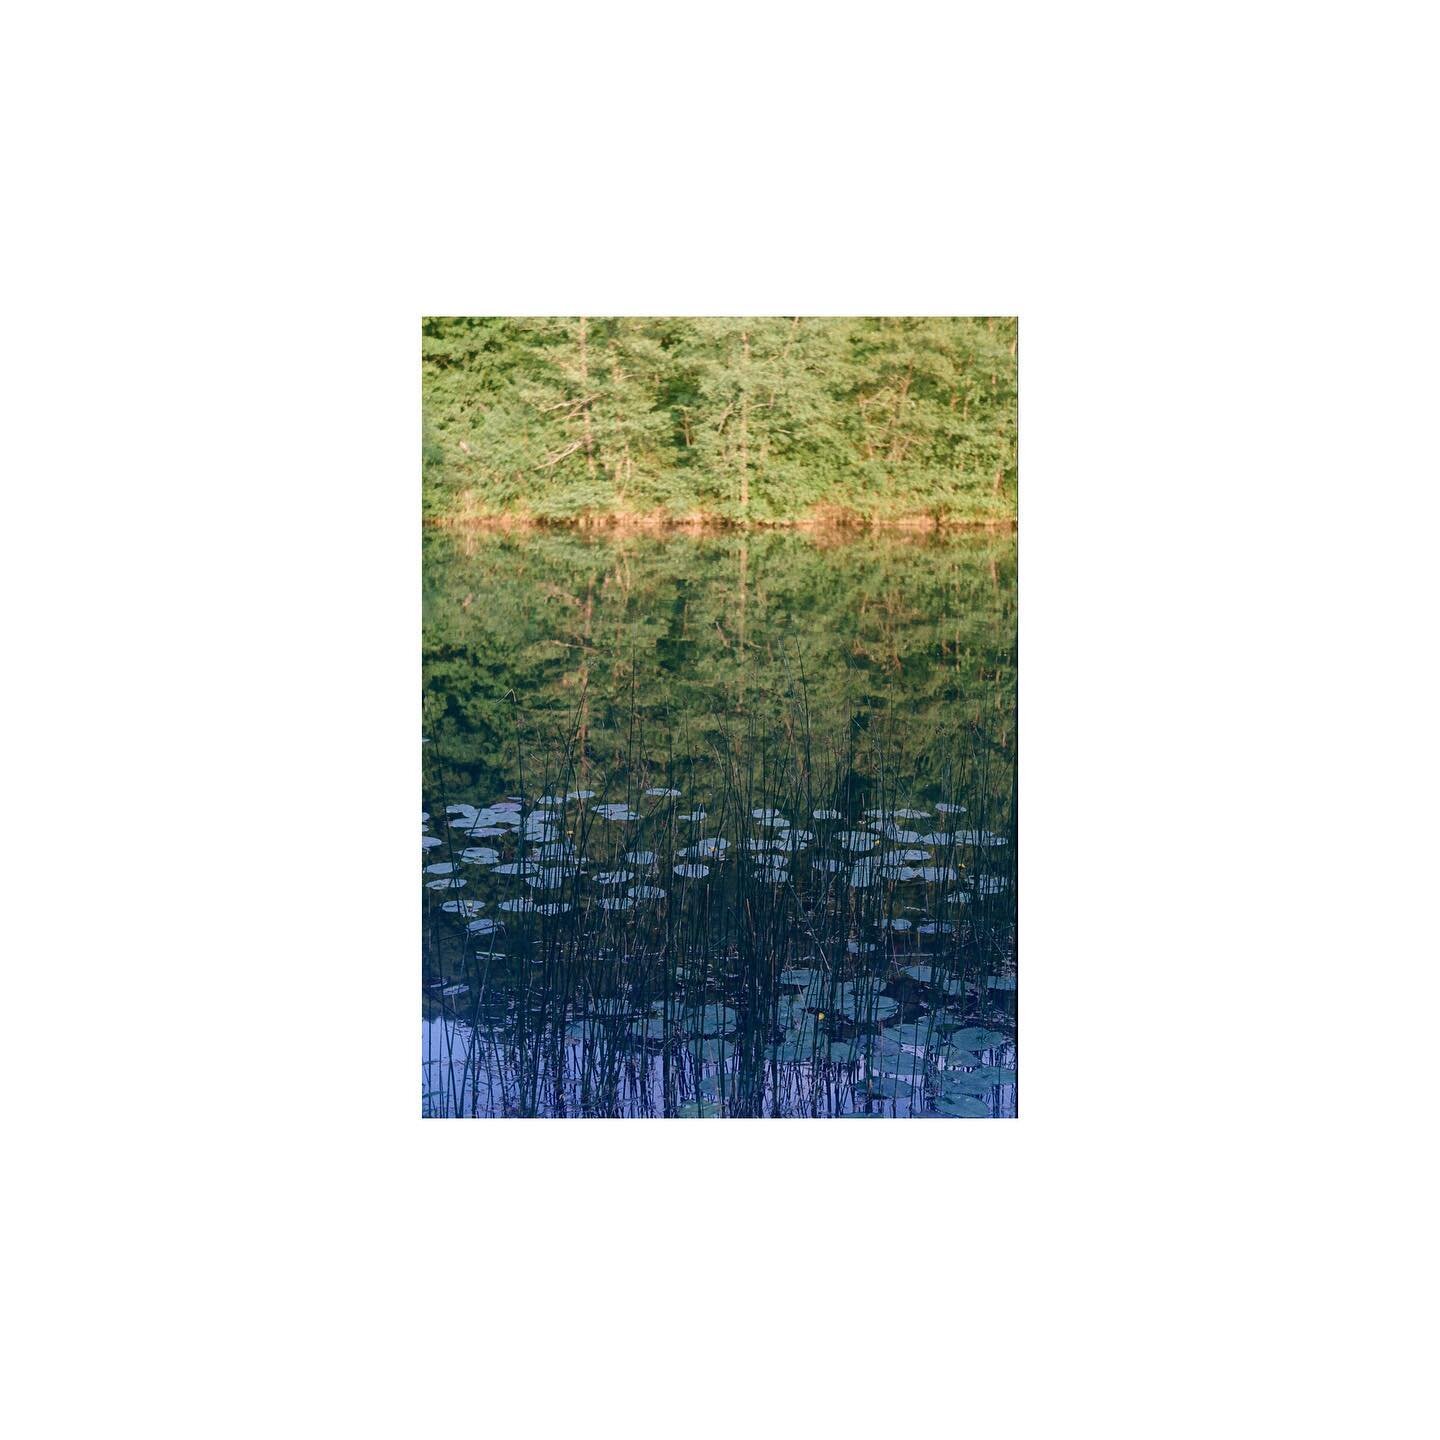 #Lakeview#greenandblue#Mreznica#lilypond#forest#patternsofnature#analogphotography#fujica#kodakgold200 @robinzonski_kamp_mreznica